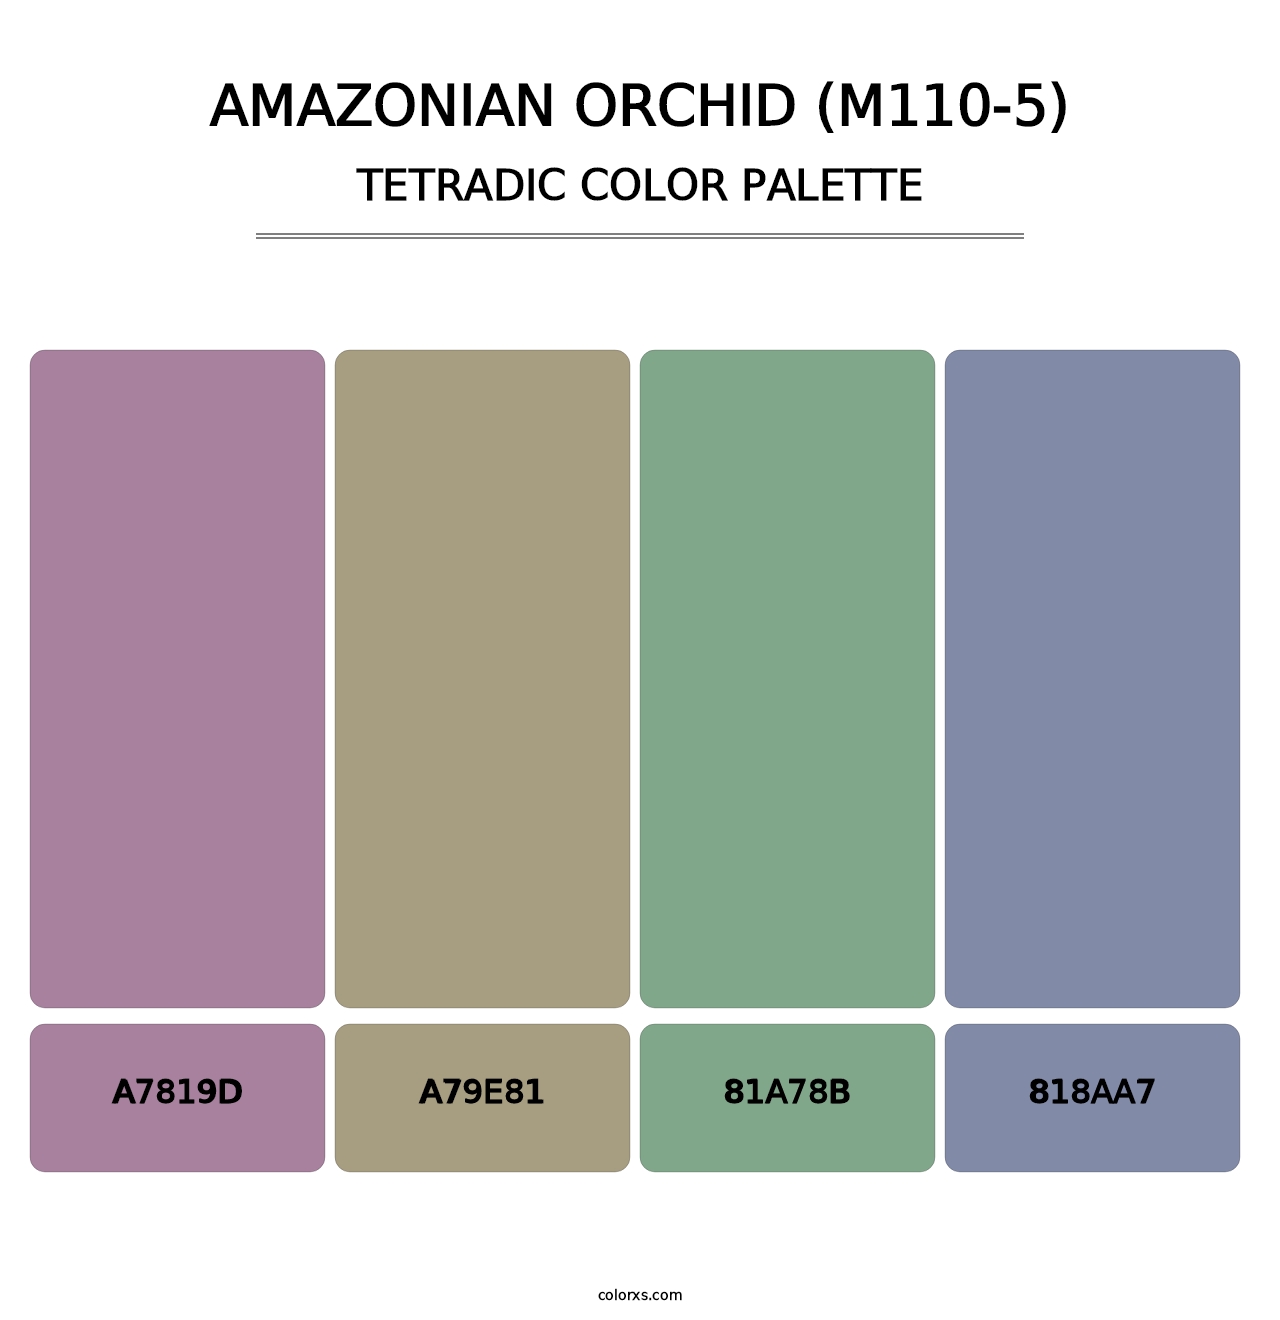 Amazonian Orchid (M110-5) - Tetradic Color Palette